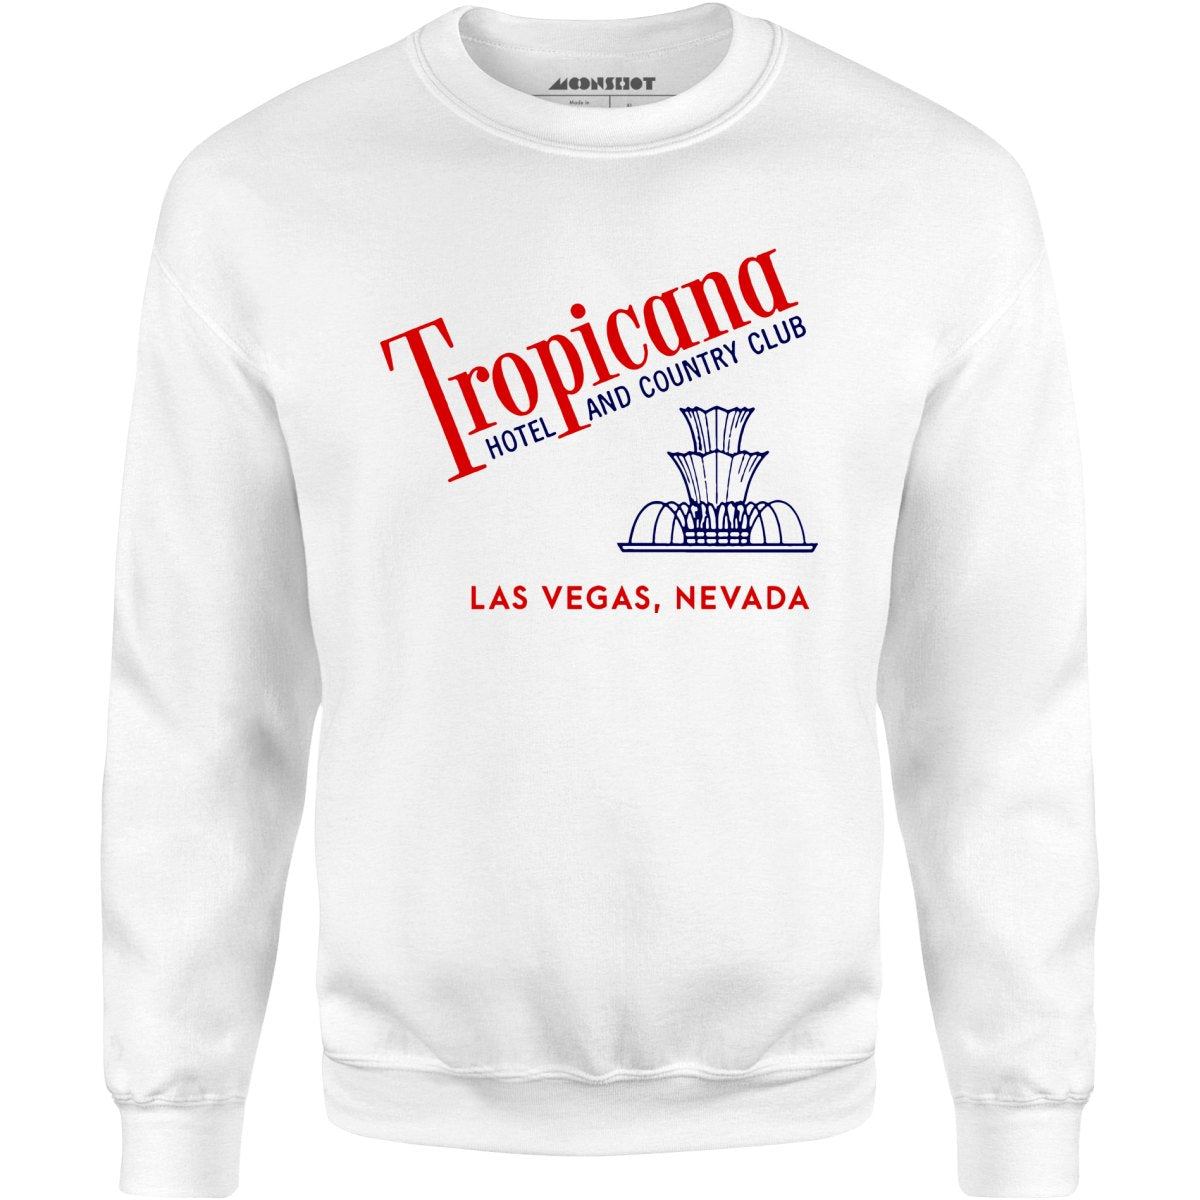 Tropicana Hotel and Country Club - Vintage Las Vegas - Unisex Sweatshirt